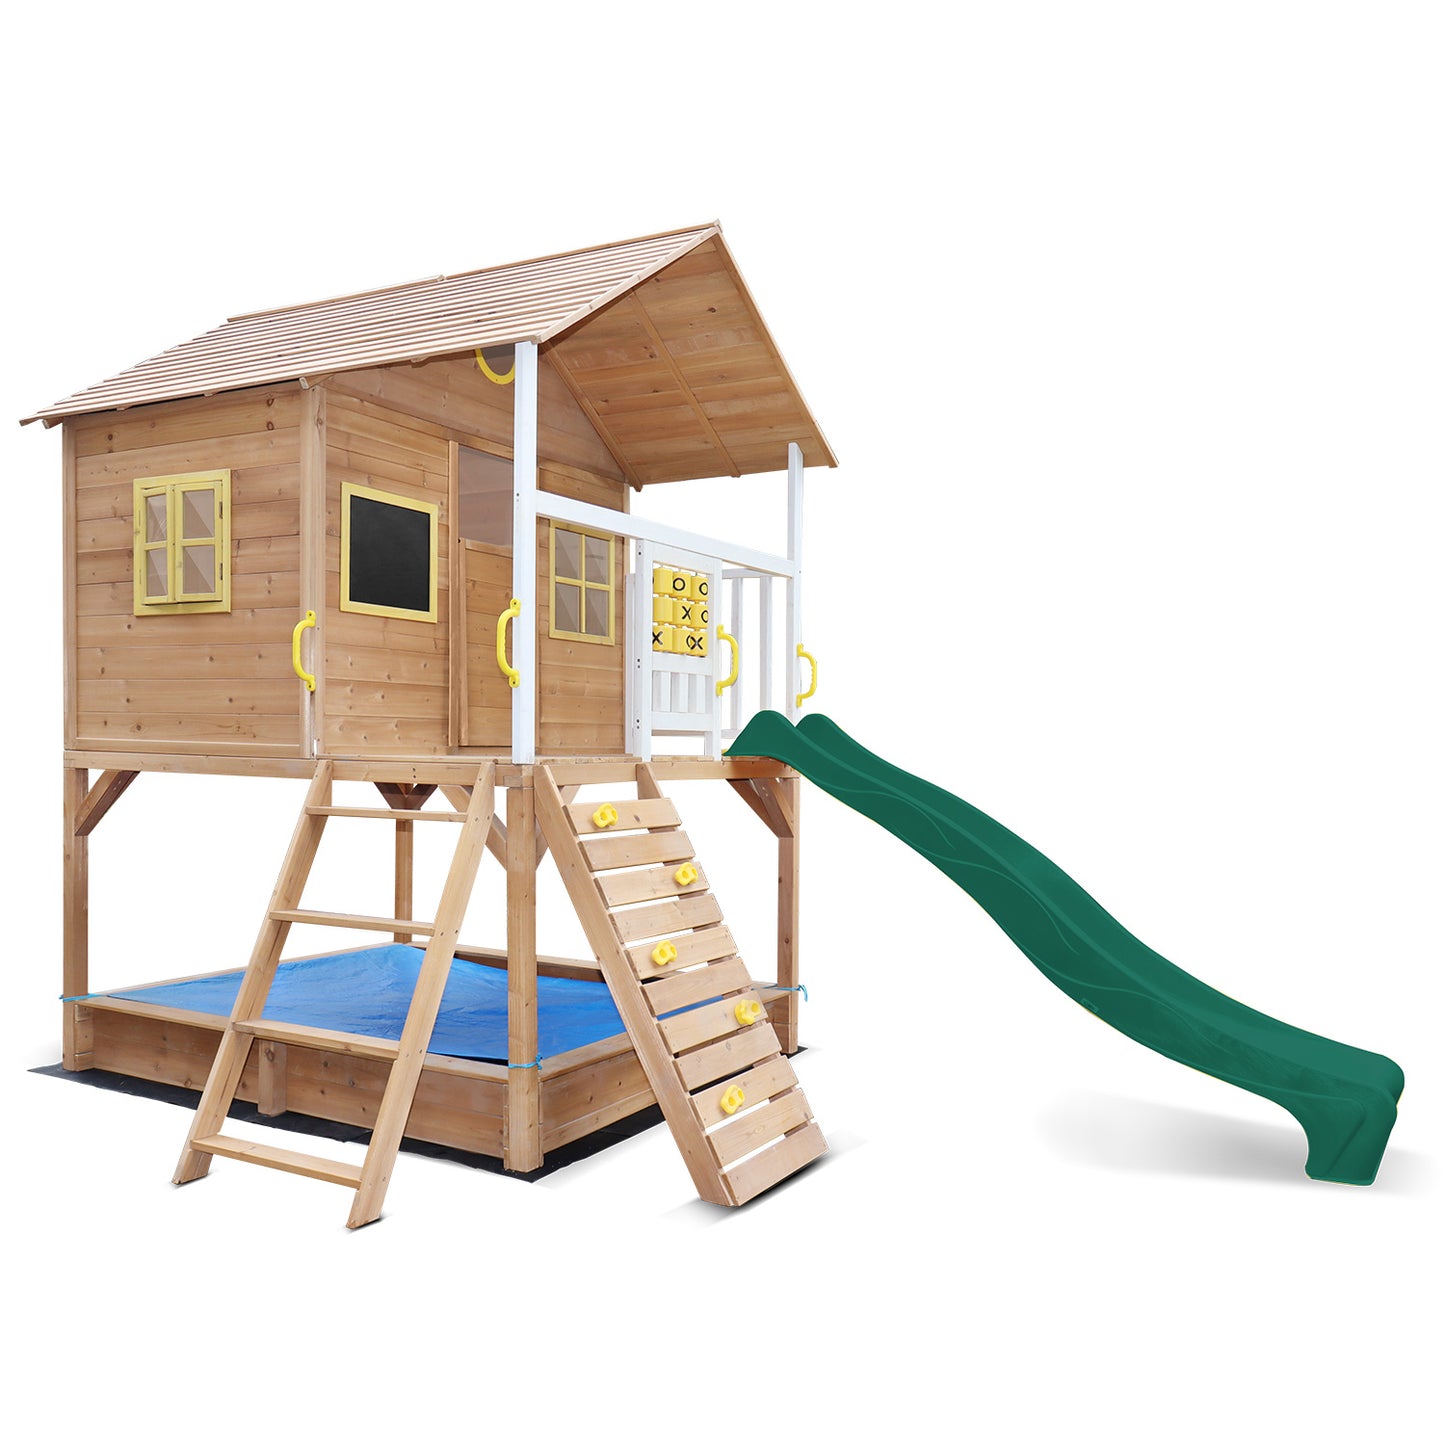 Lifespan Kids Warrigal Cubby House - Green Slide